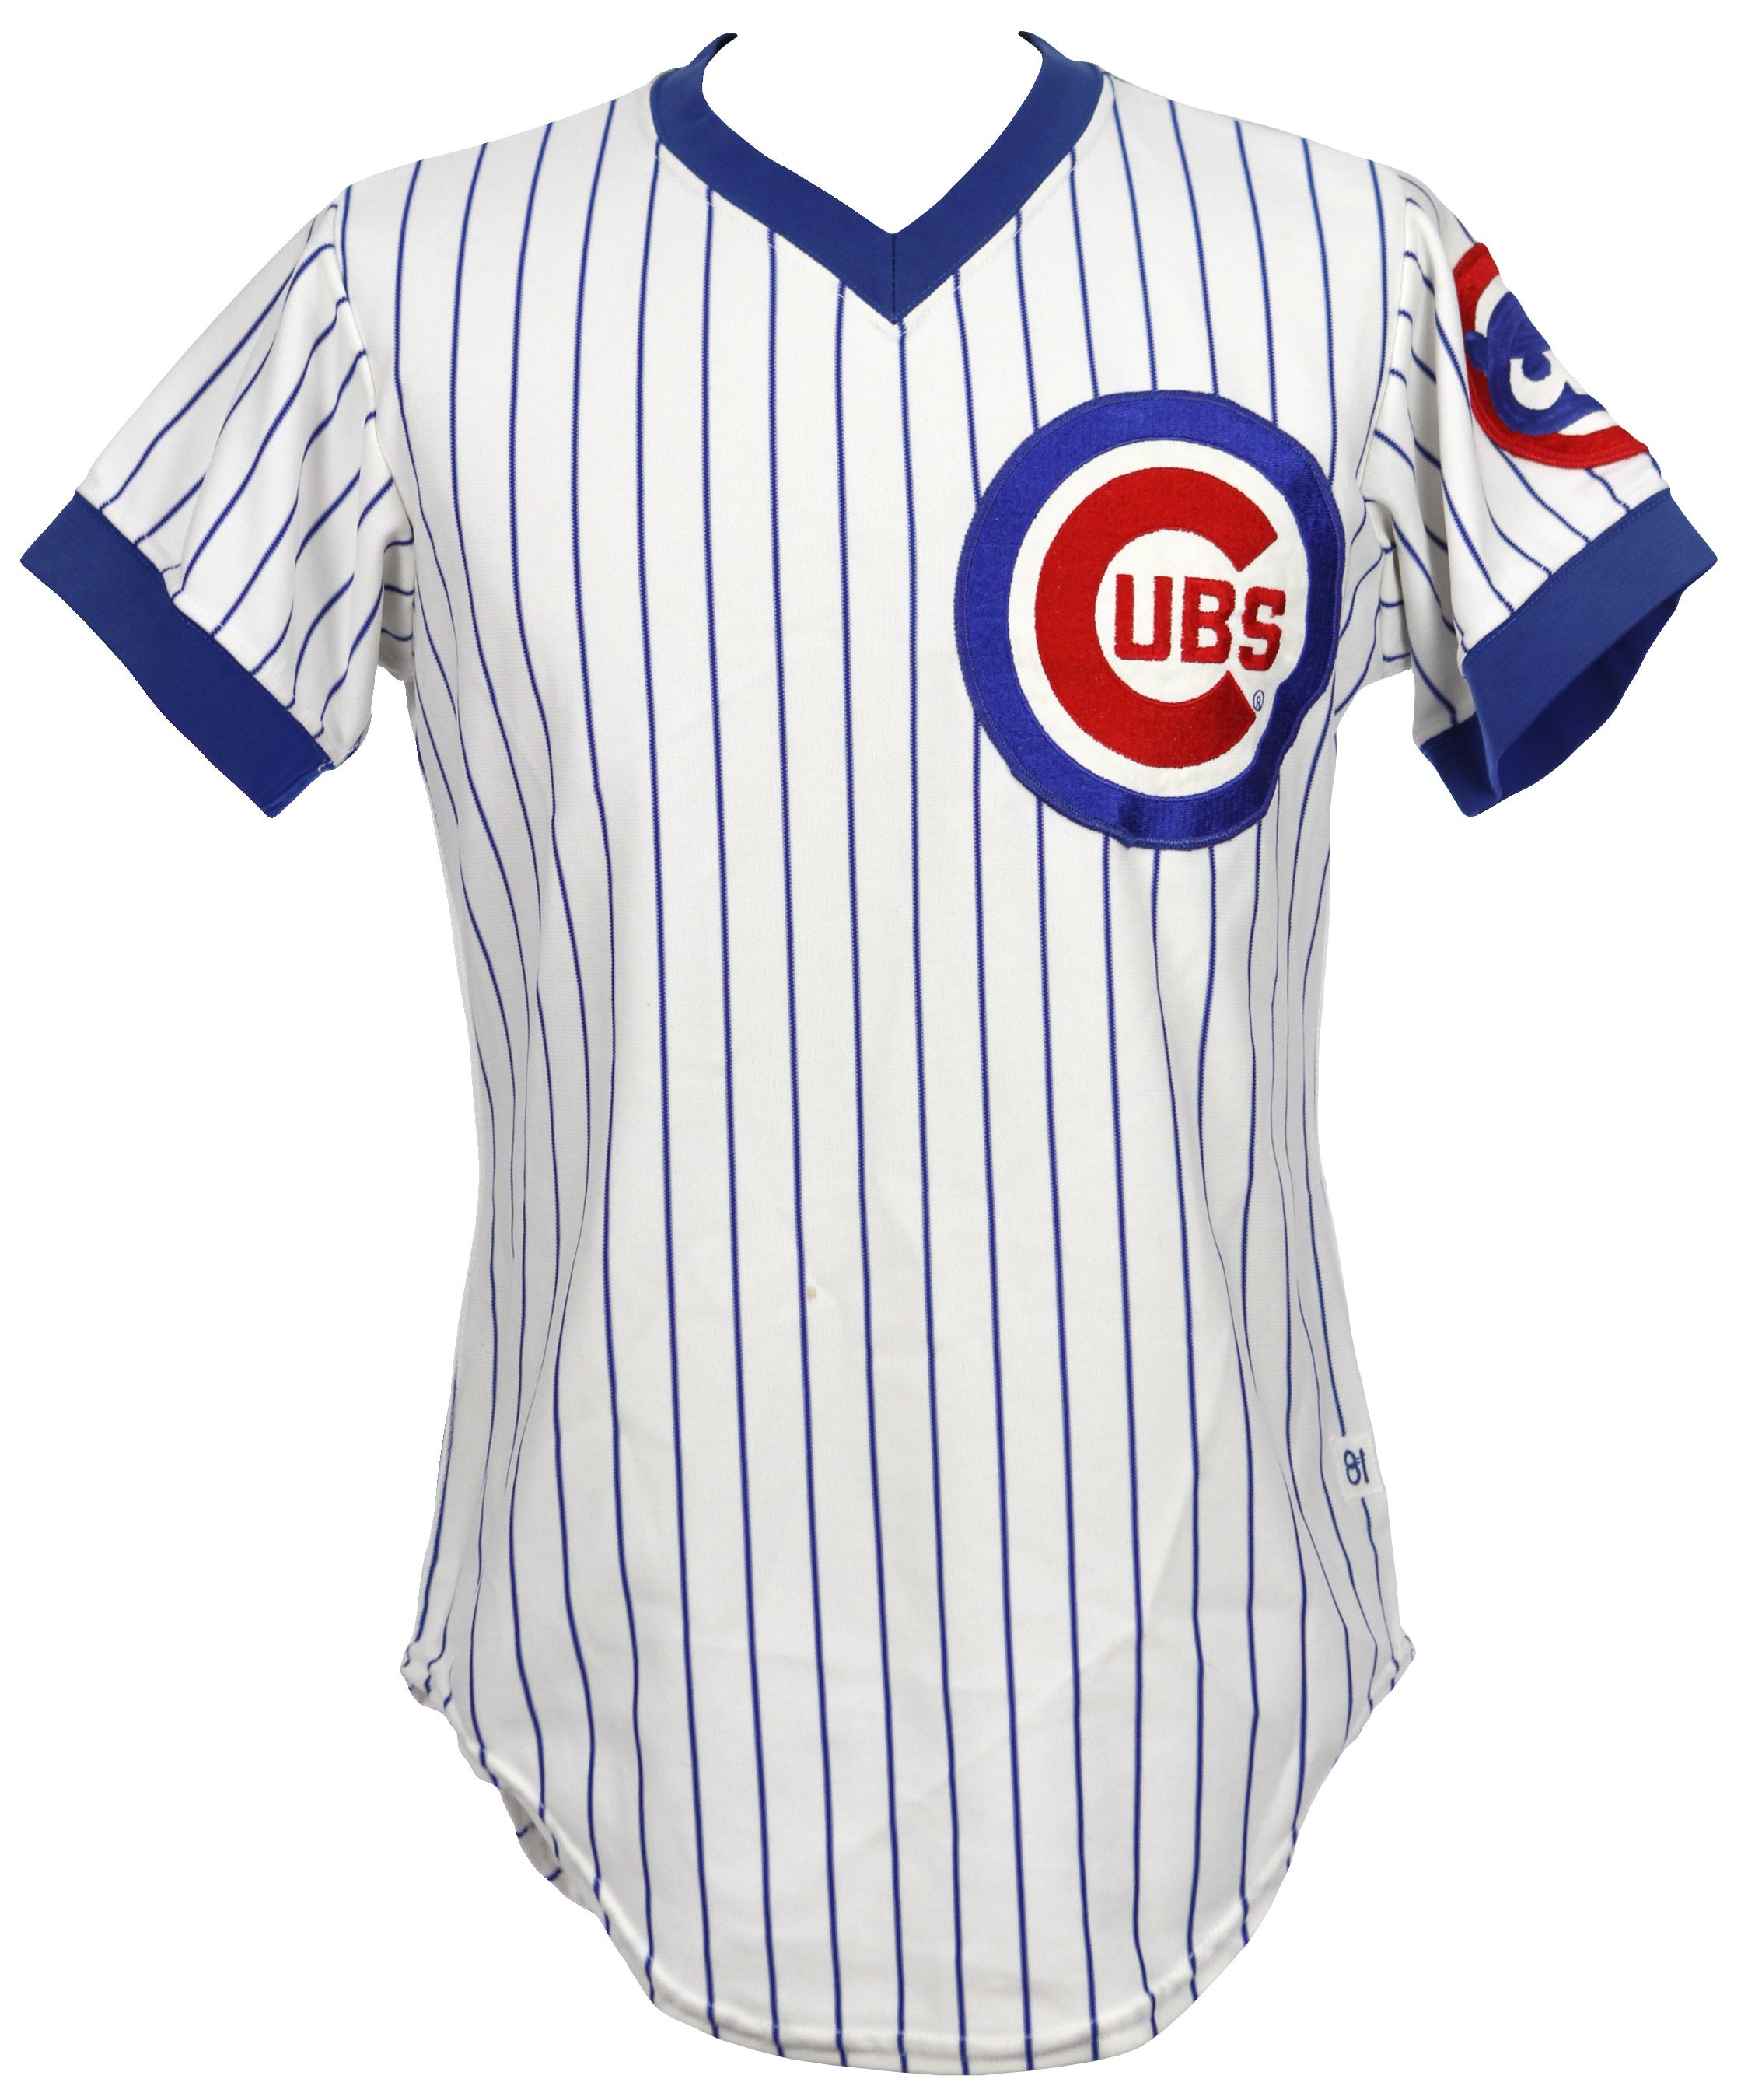 1981 cubs jersey